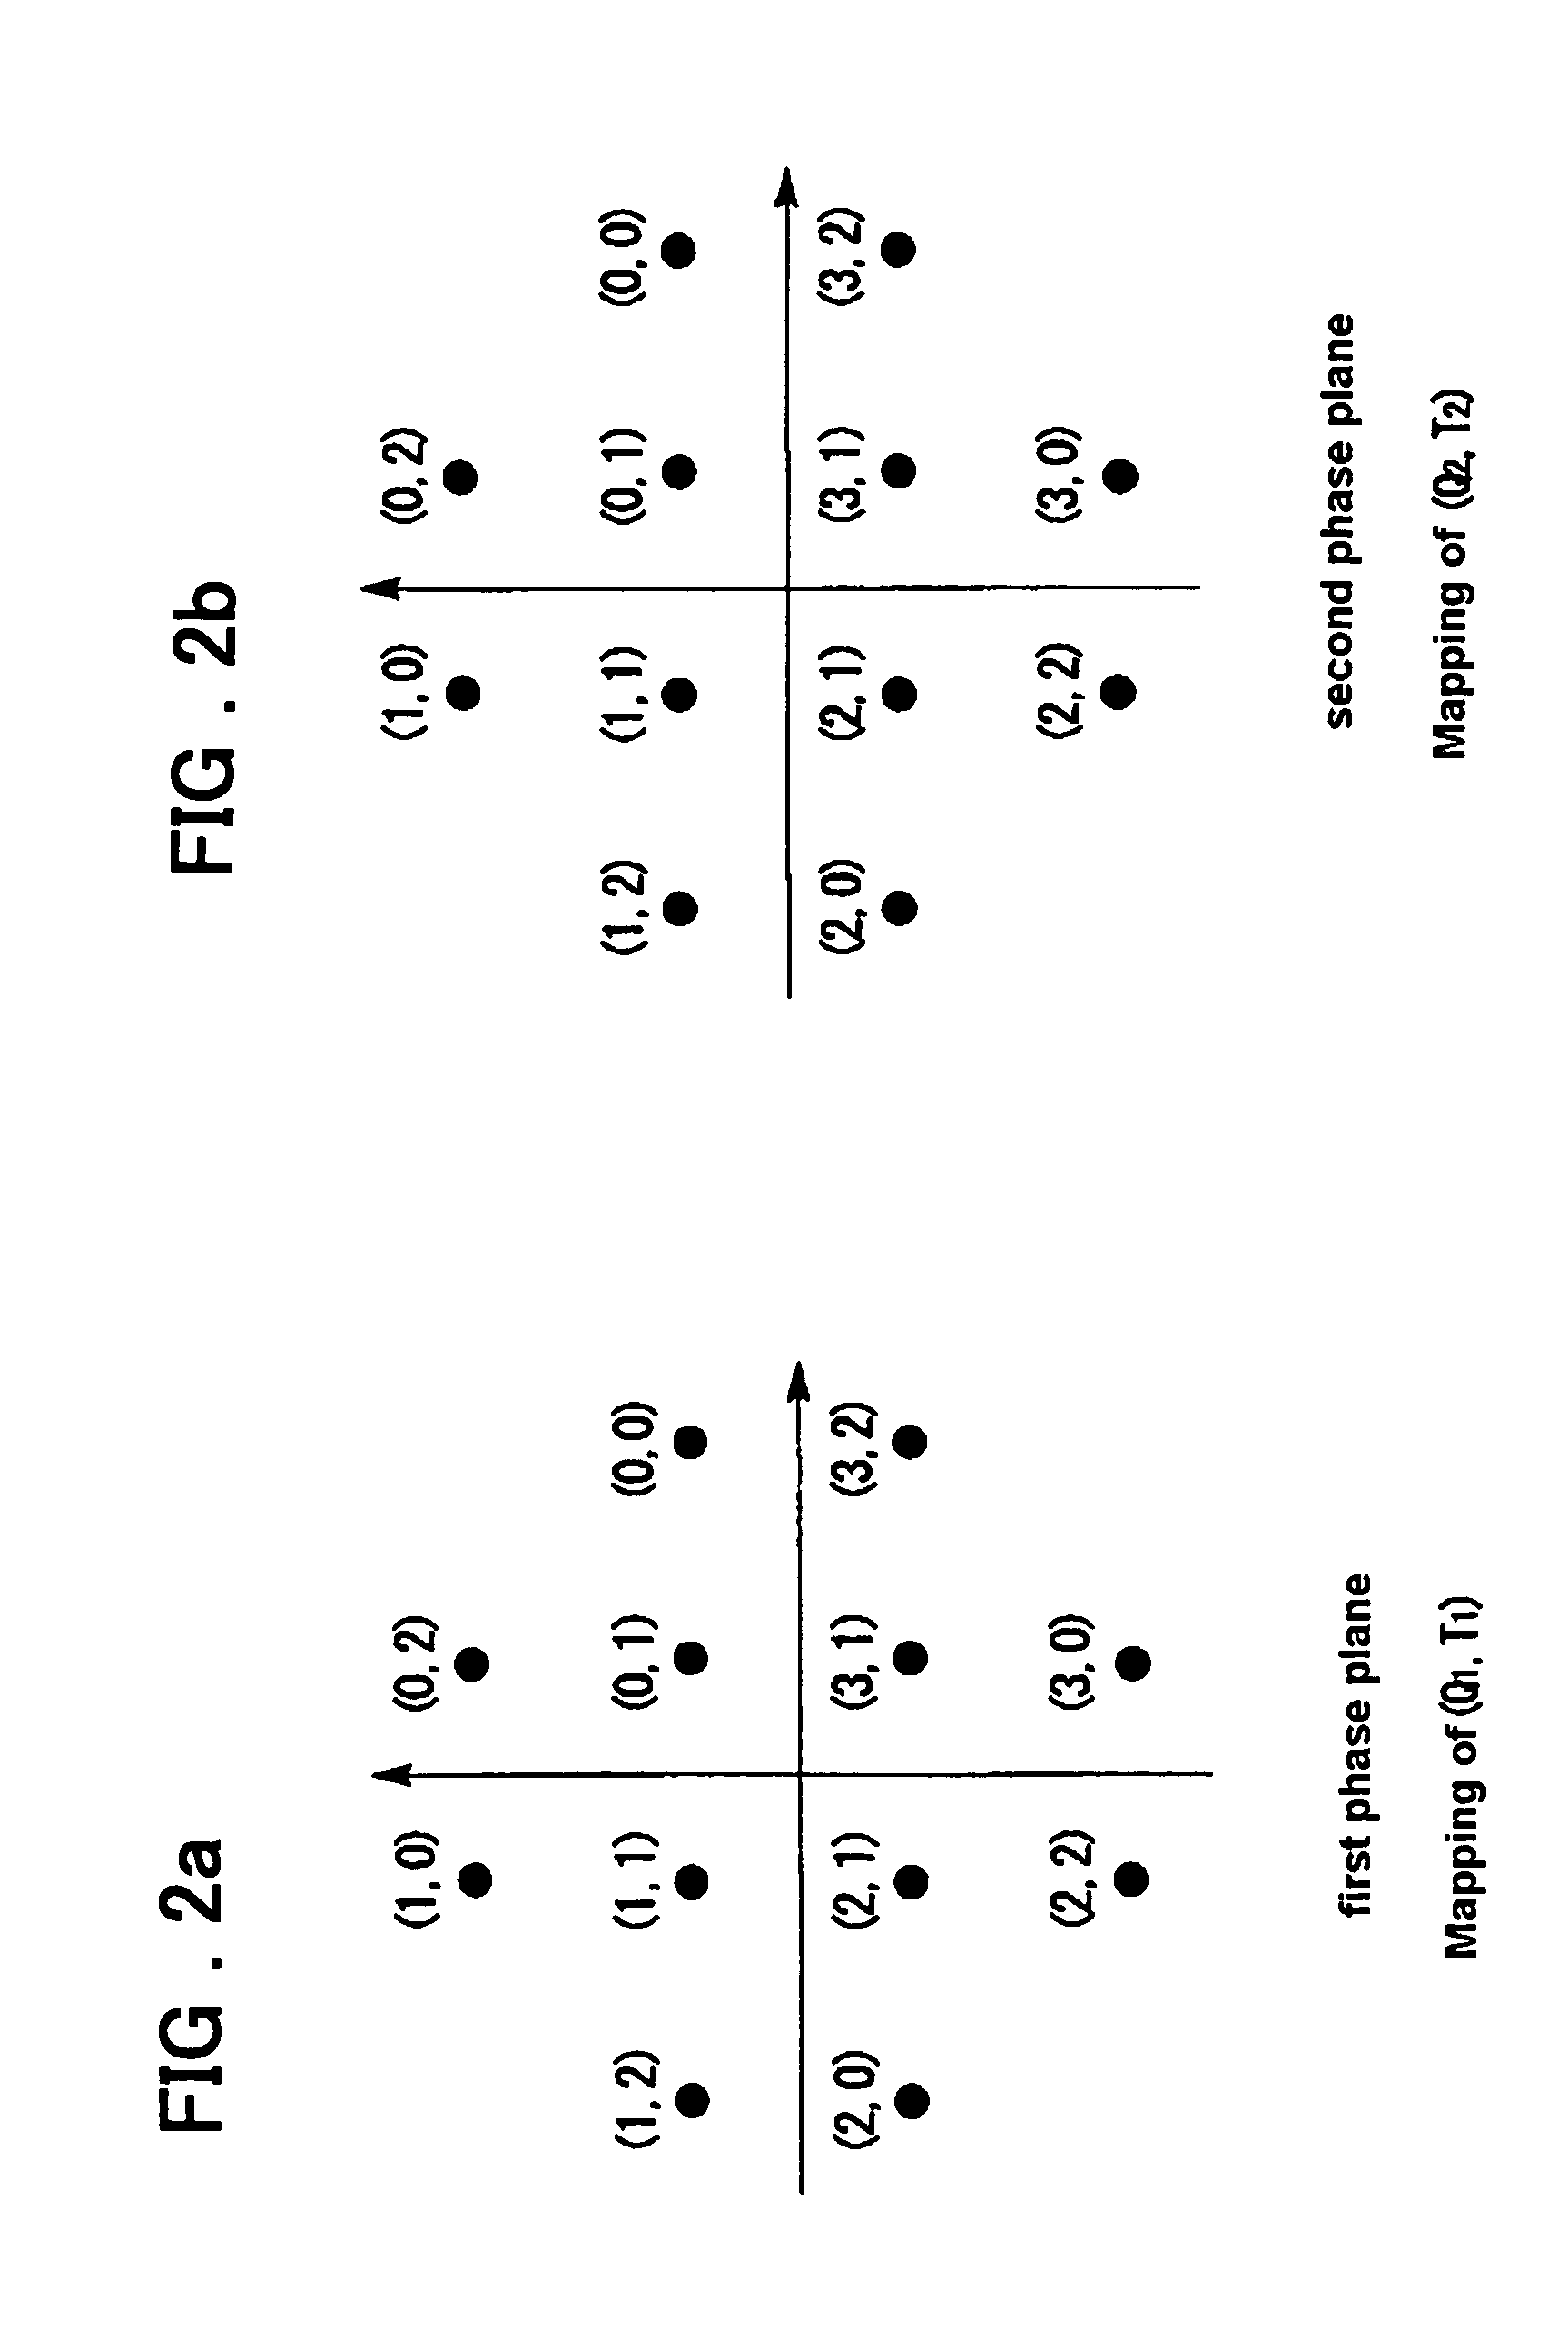 Multi-level modulation method and system